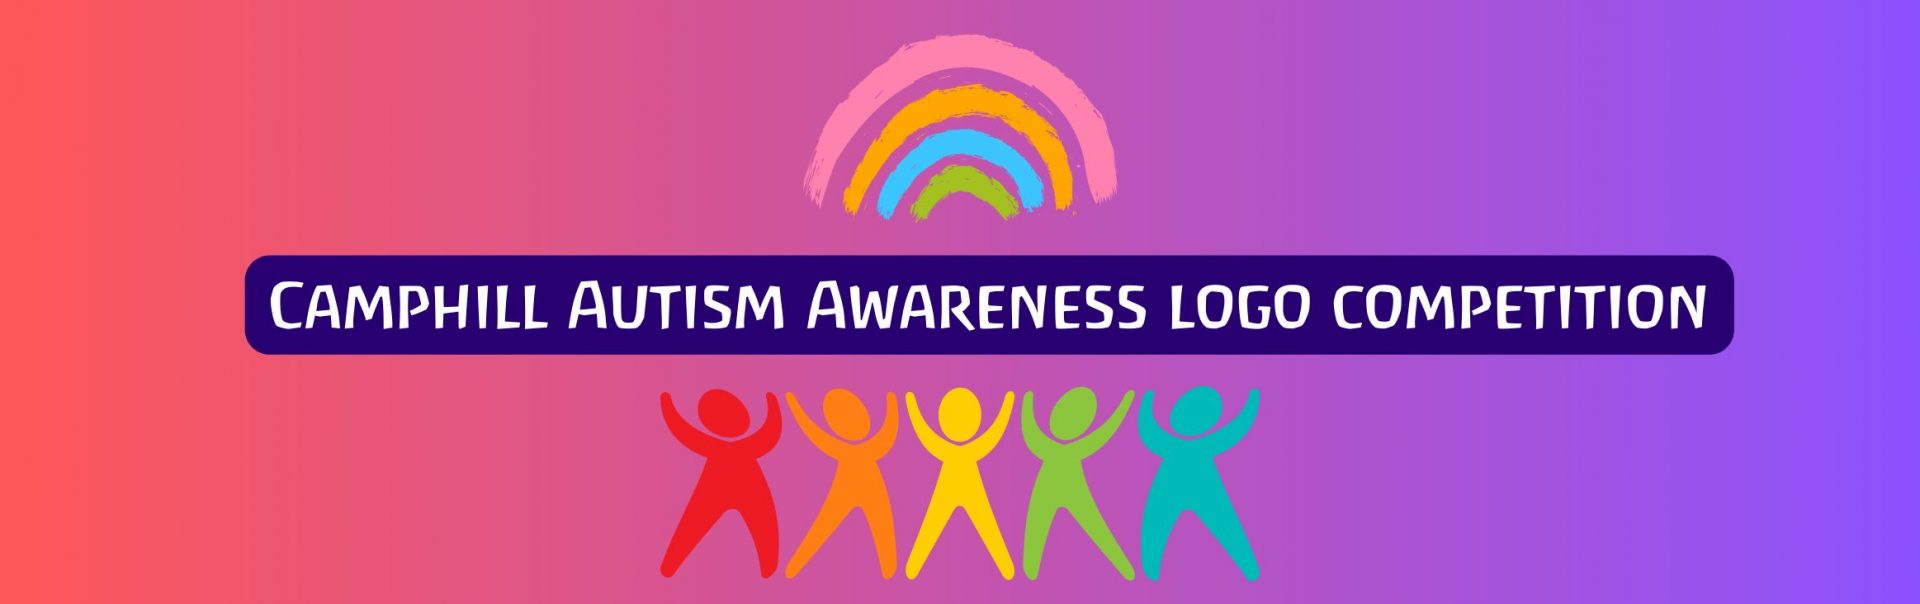 autism awareness logo competition